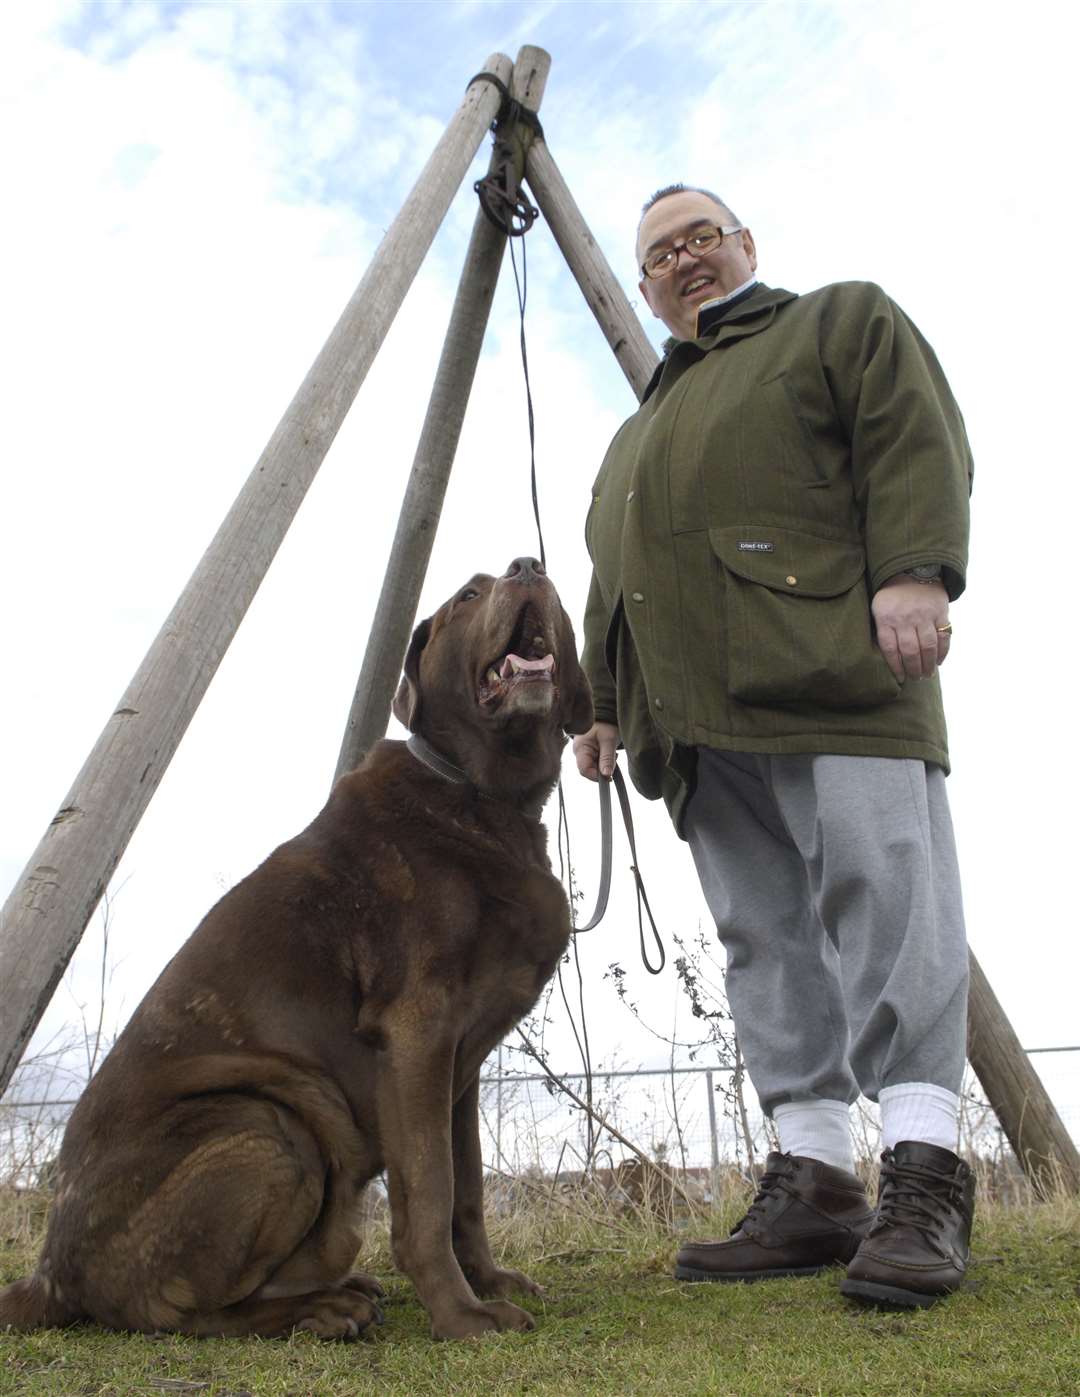 Dog walker John Padwick was left baffled by the piece 10 years ago